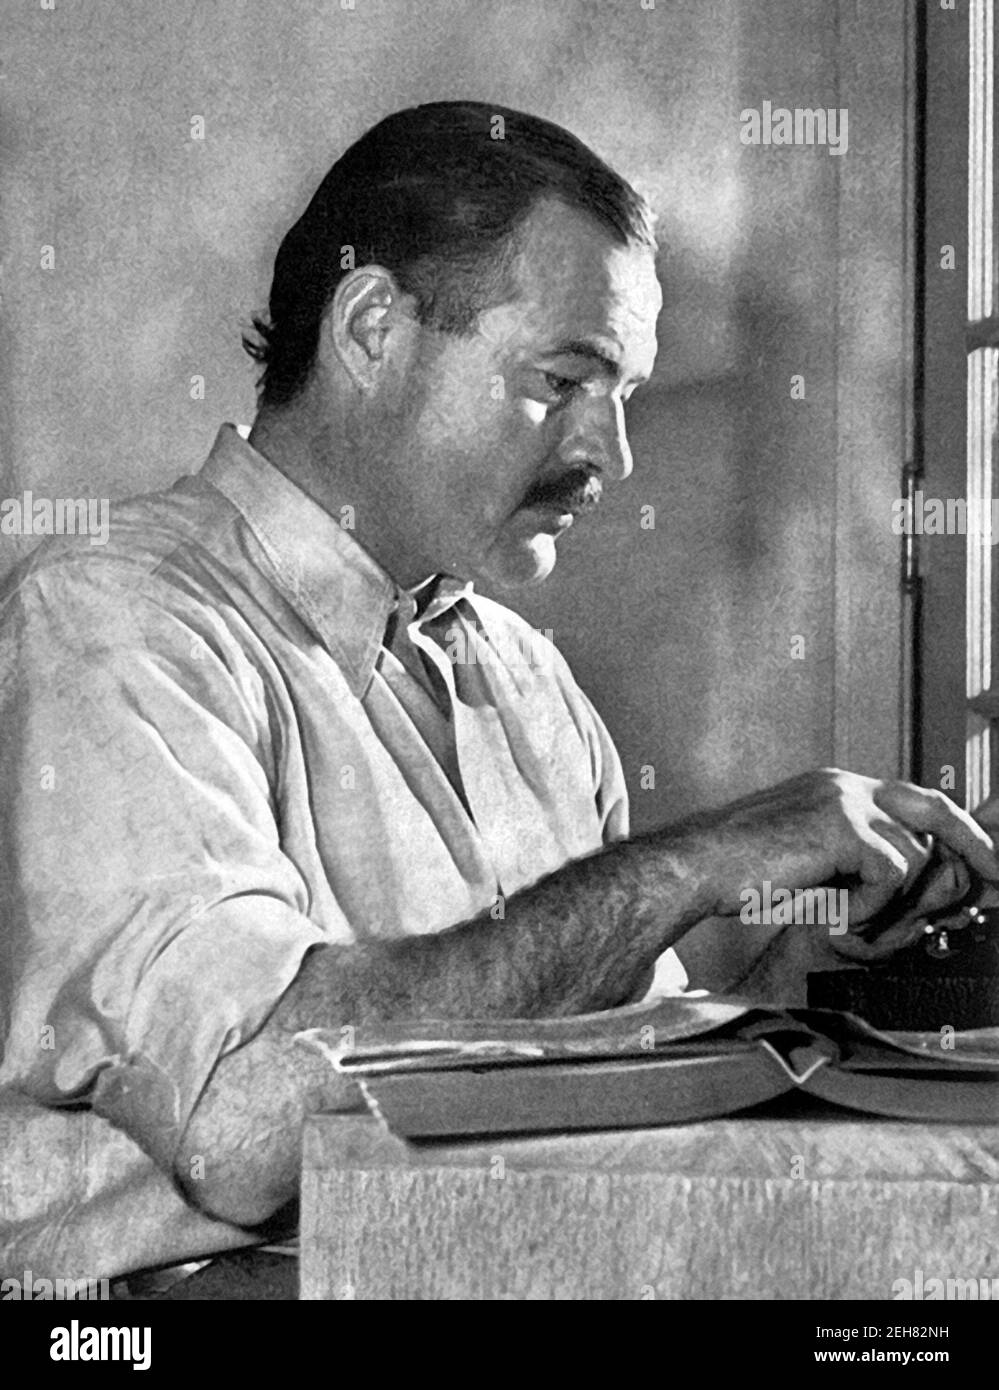 Ernest Hemingway. Portrait of the American writer, Ernest Miller Hemingway (1899-1961) at his typewriter in 1939. Stock Photo